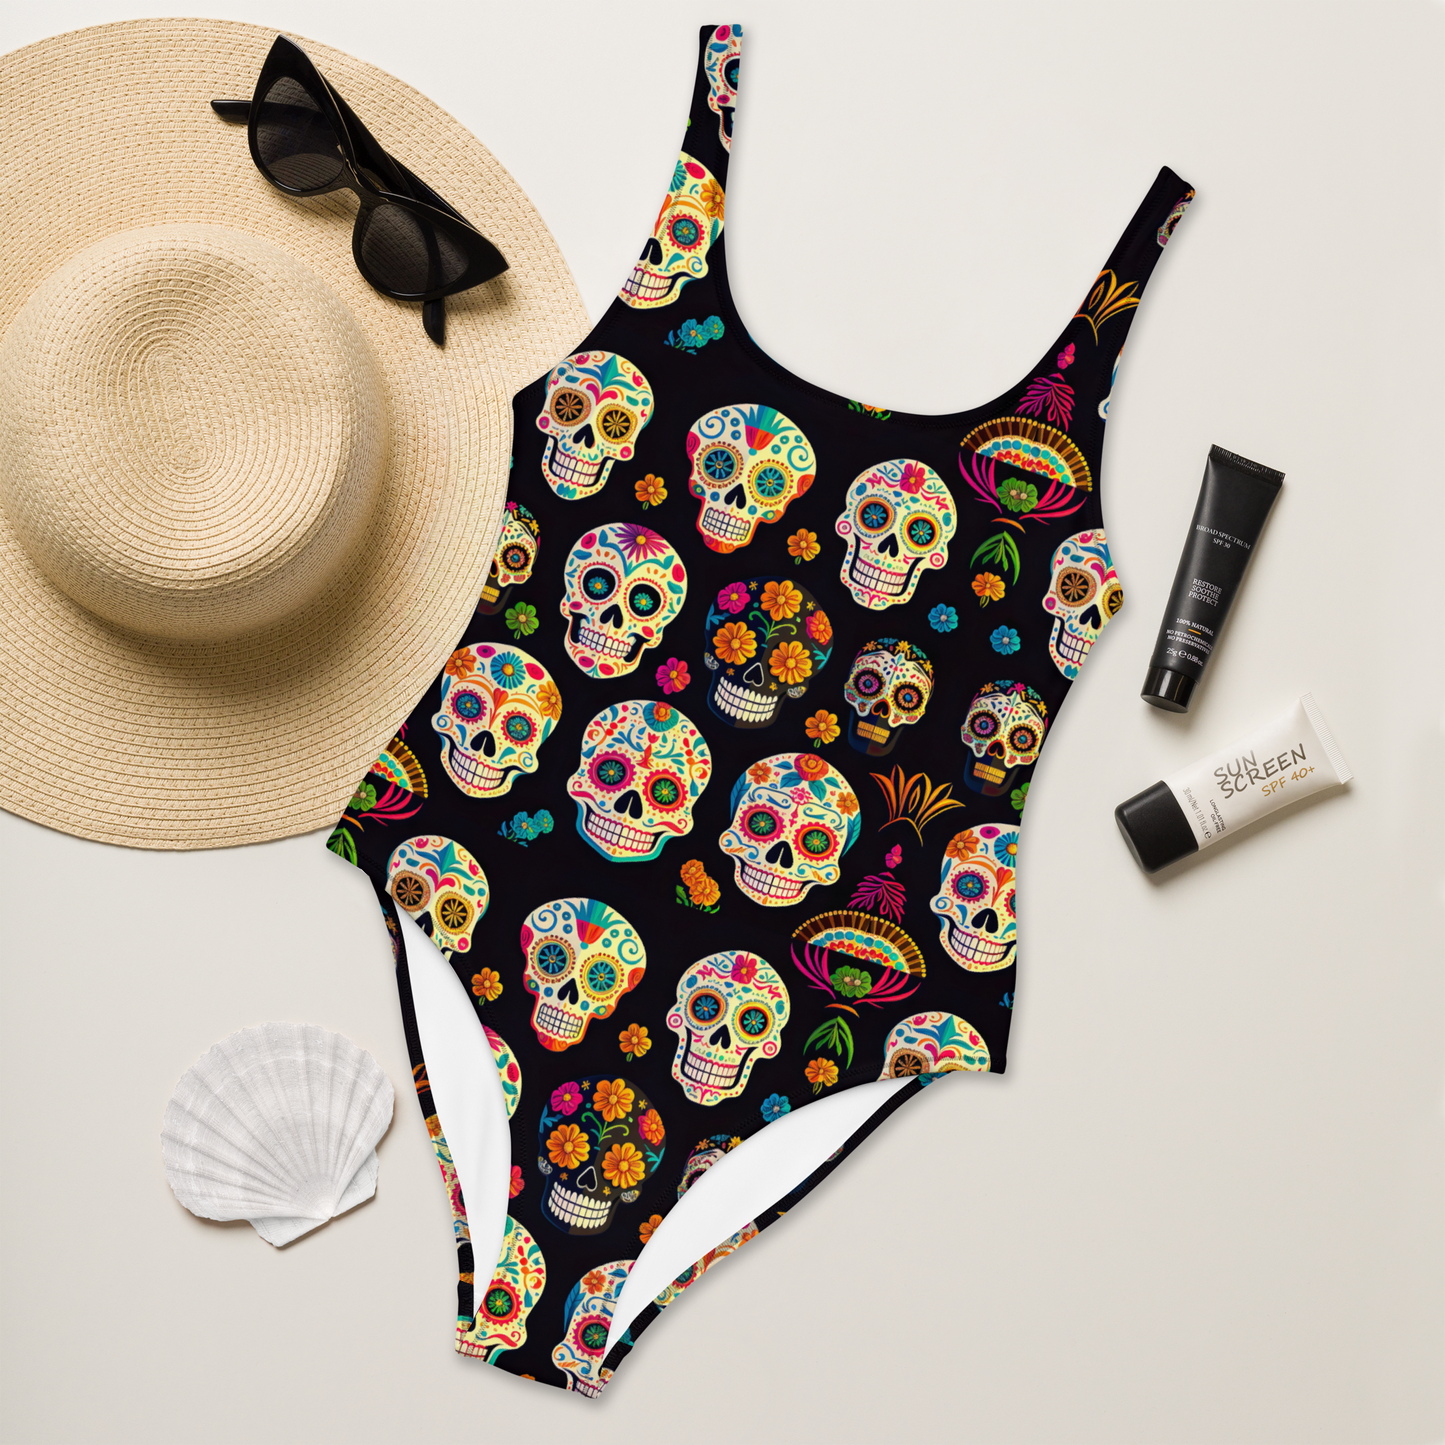 One piece swimsuit, skull pattern, black background